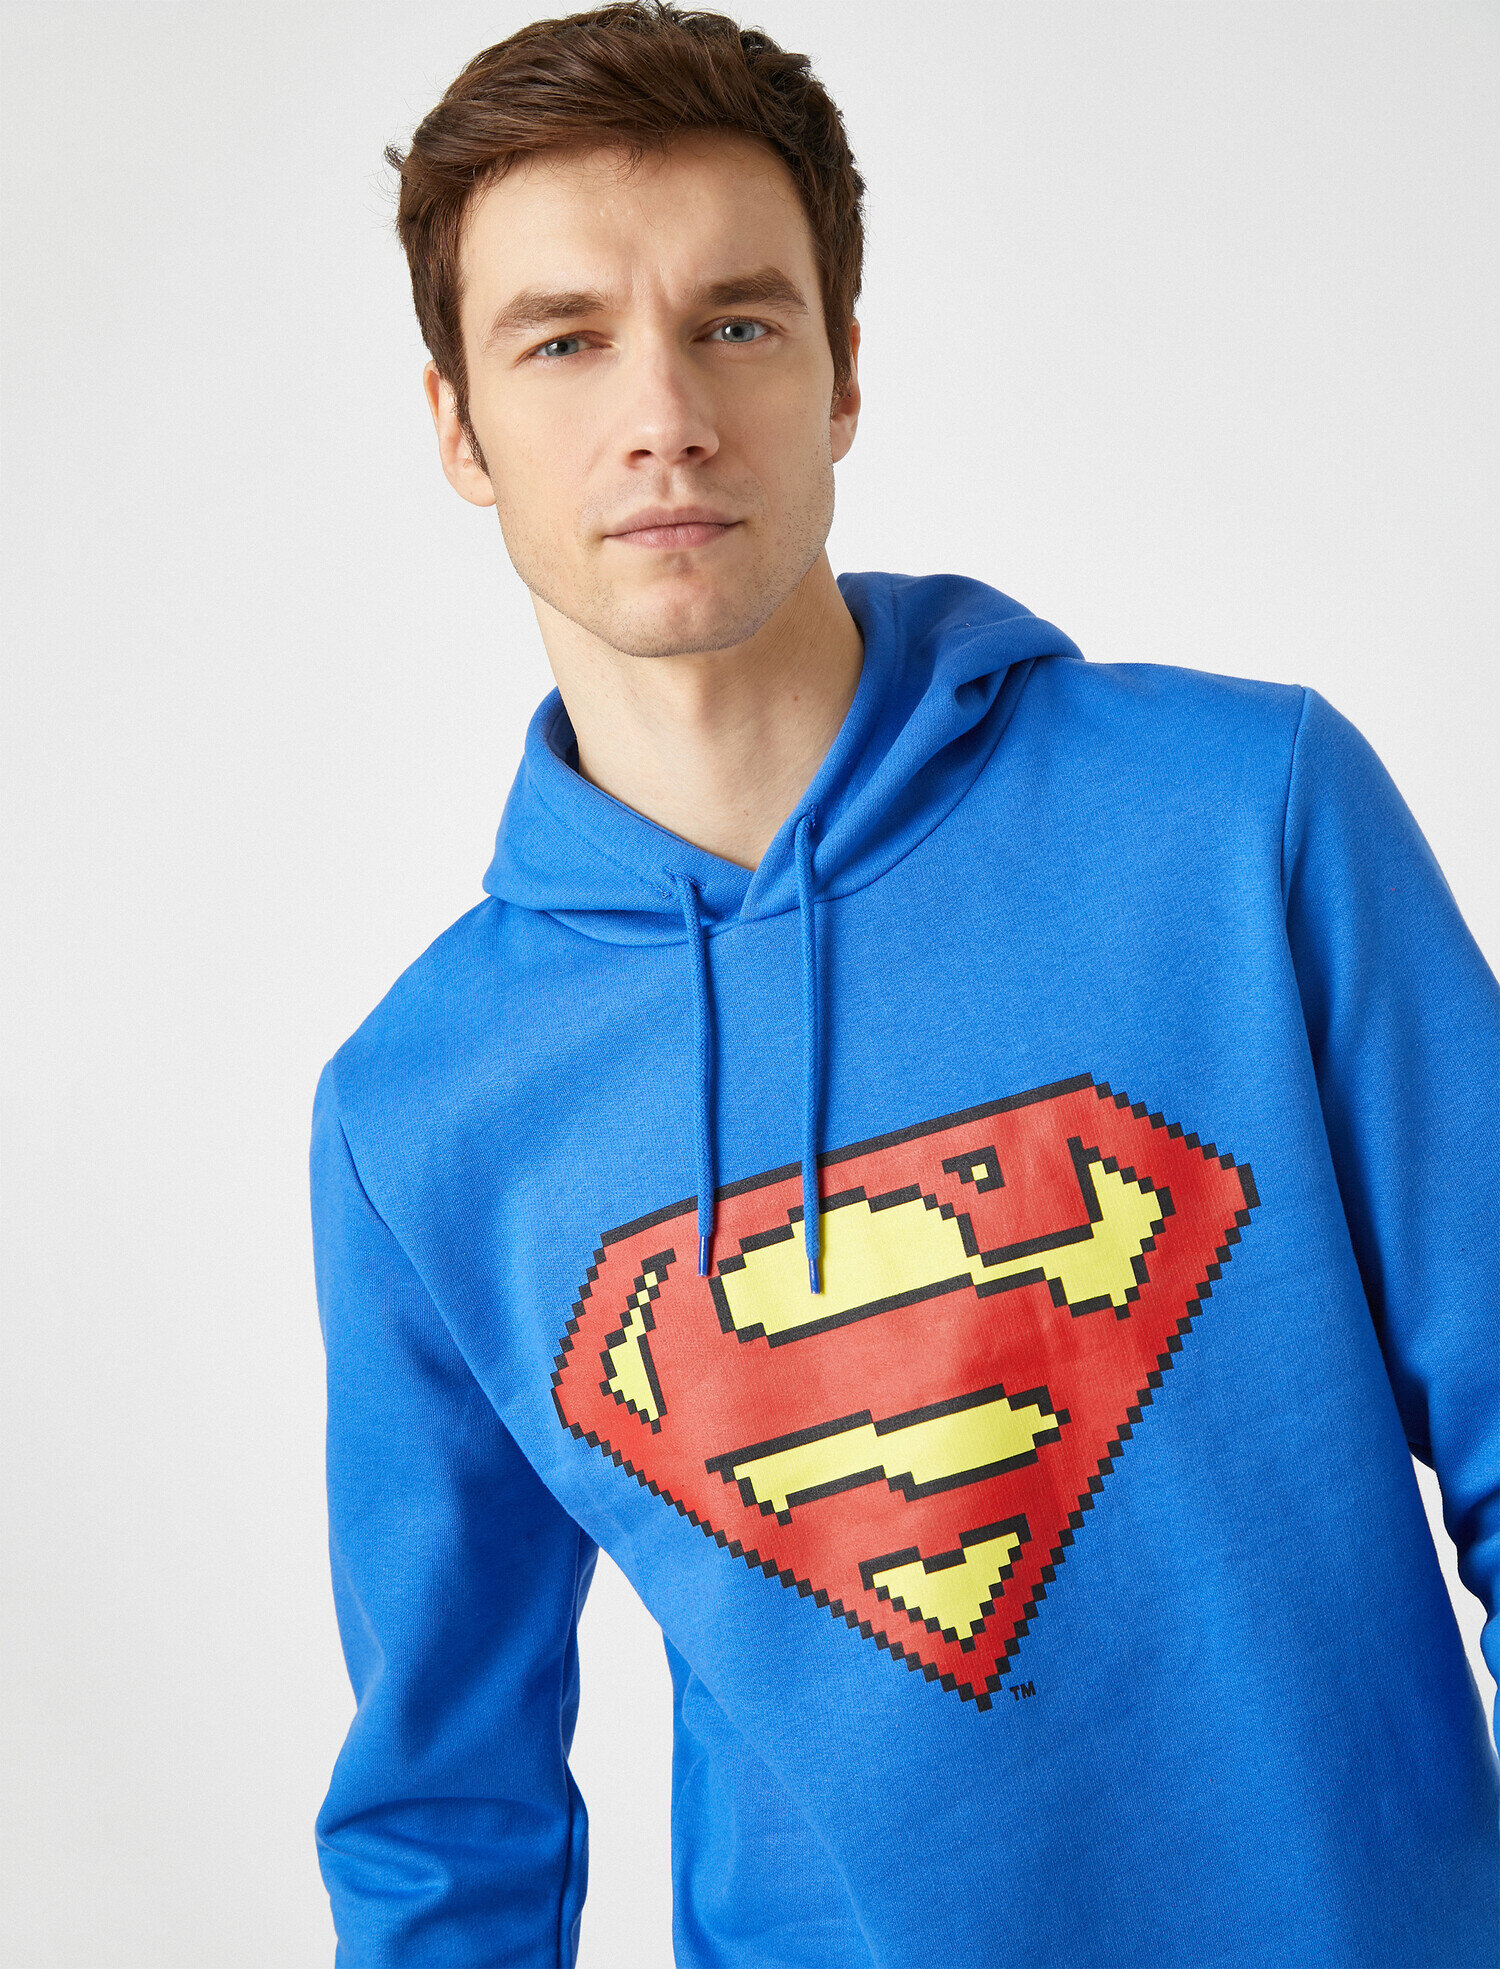 sweatshirt superman